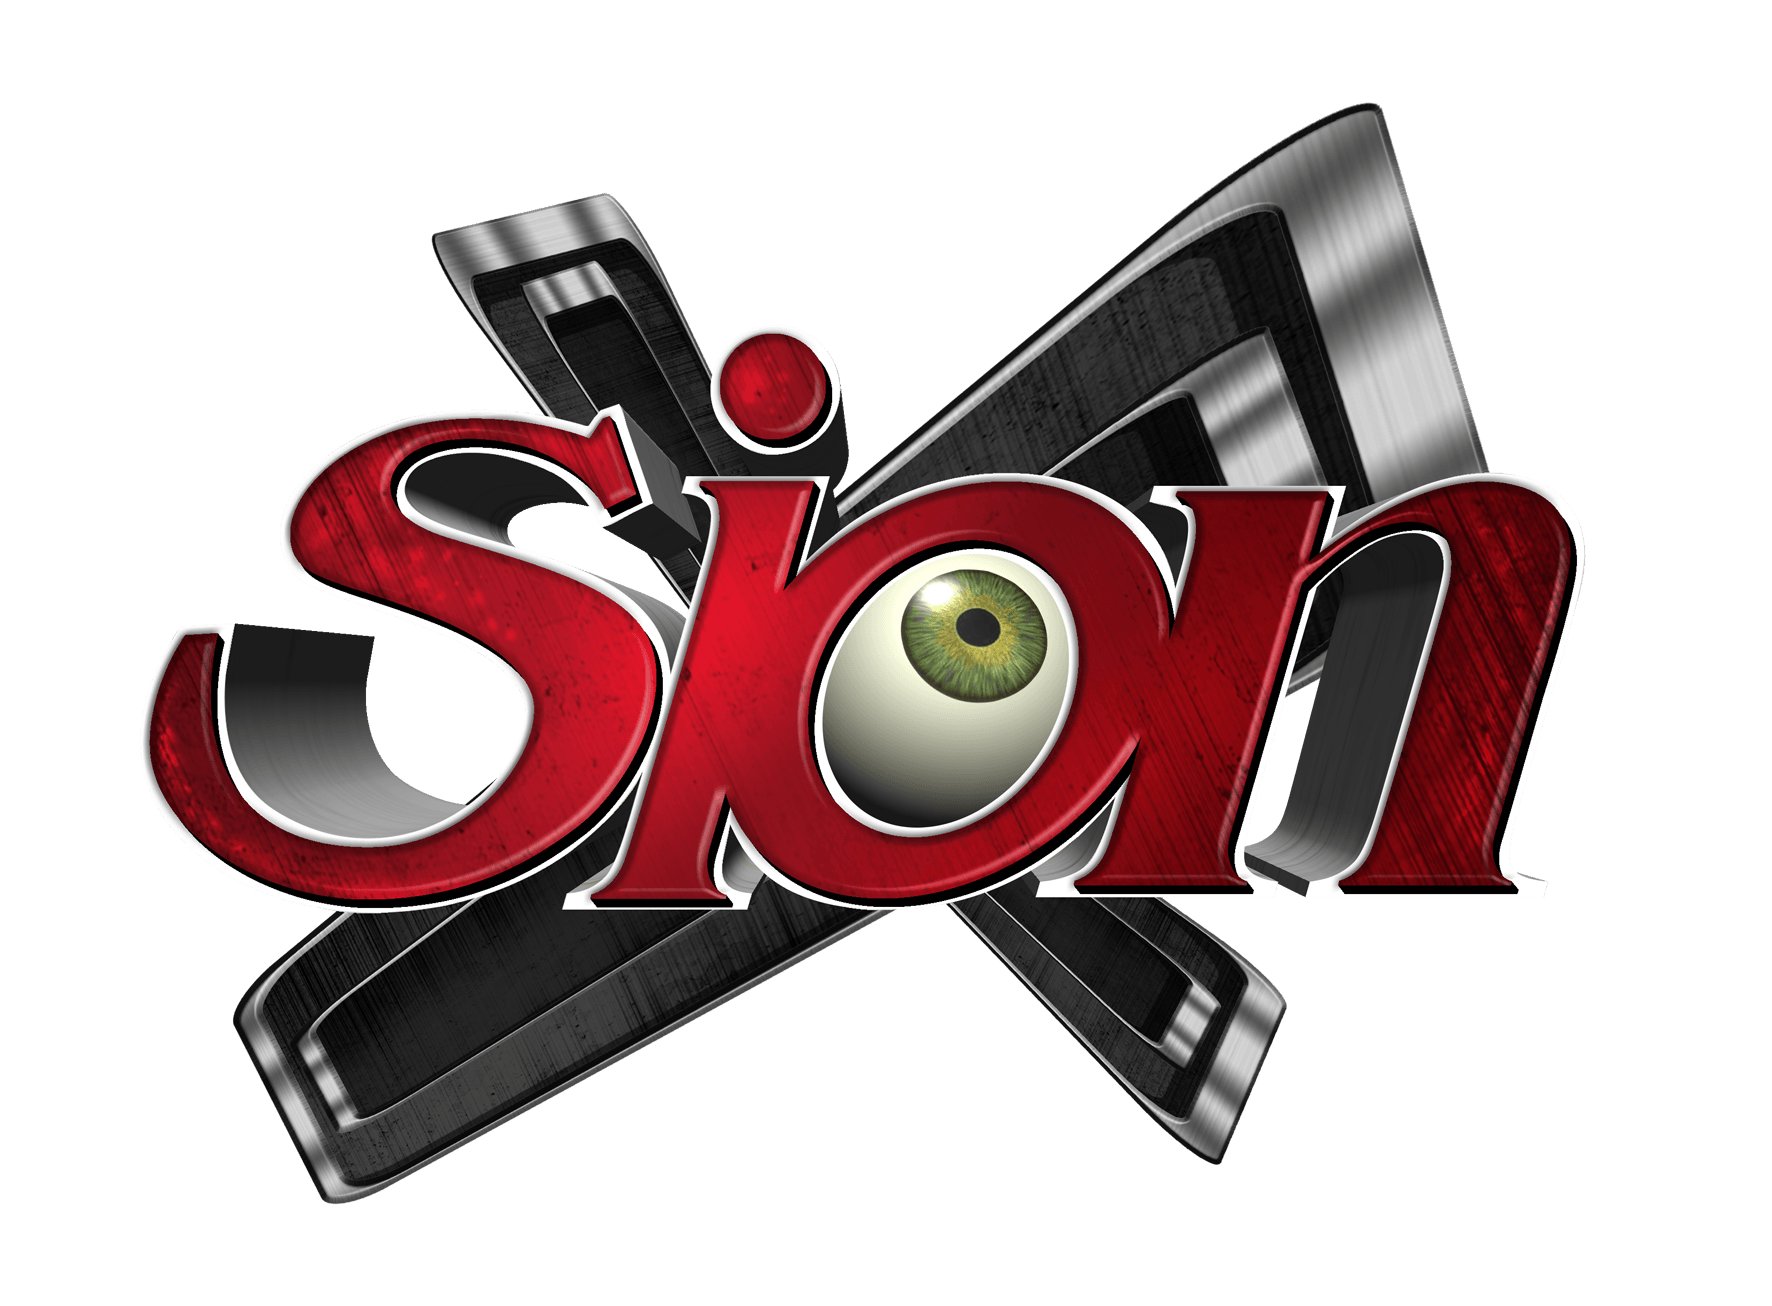 Sion Logo - SION LOGO SERMA&DNT | SERMA&DNT | Pinterest | Logos